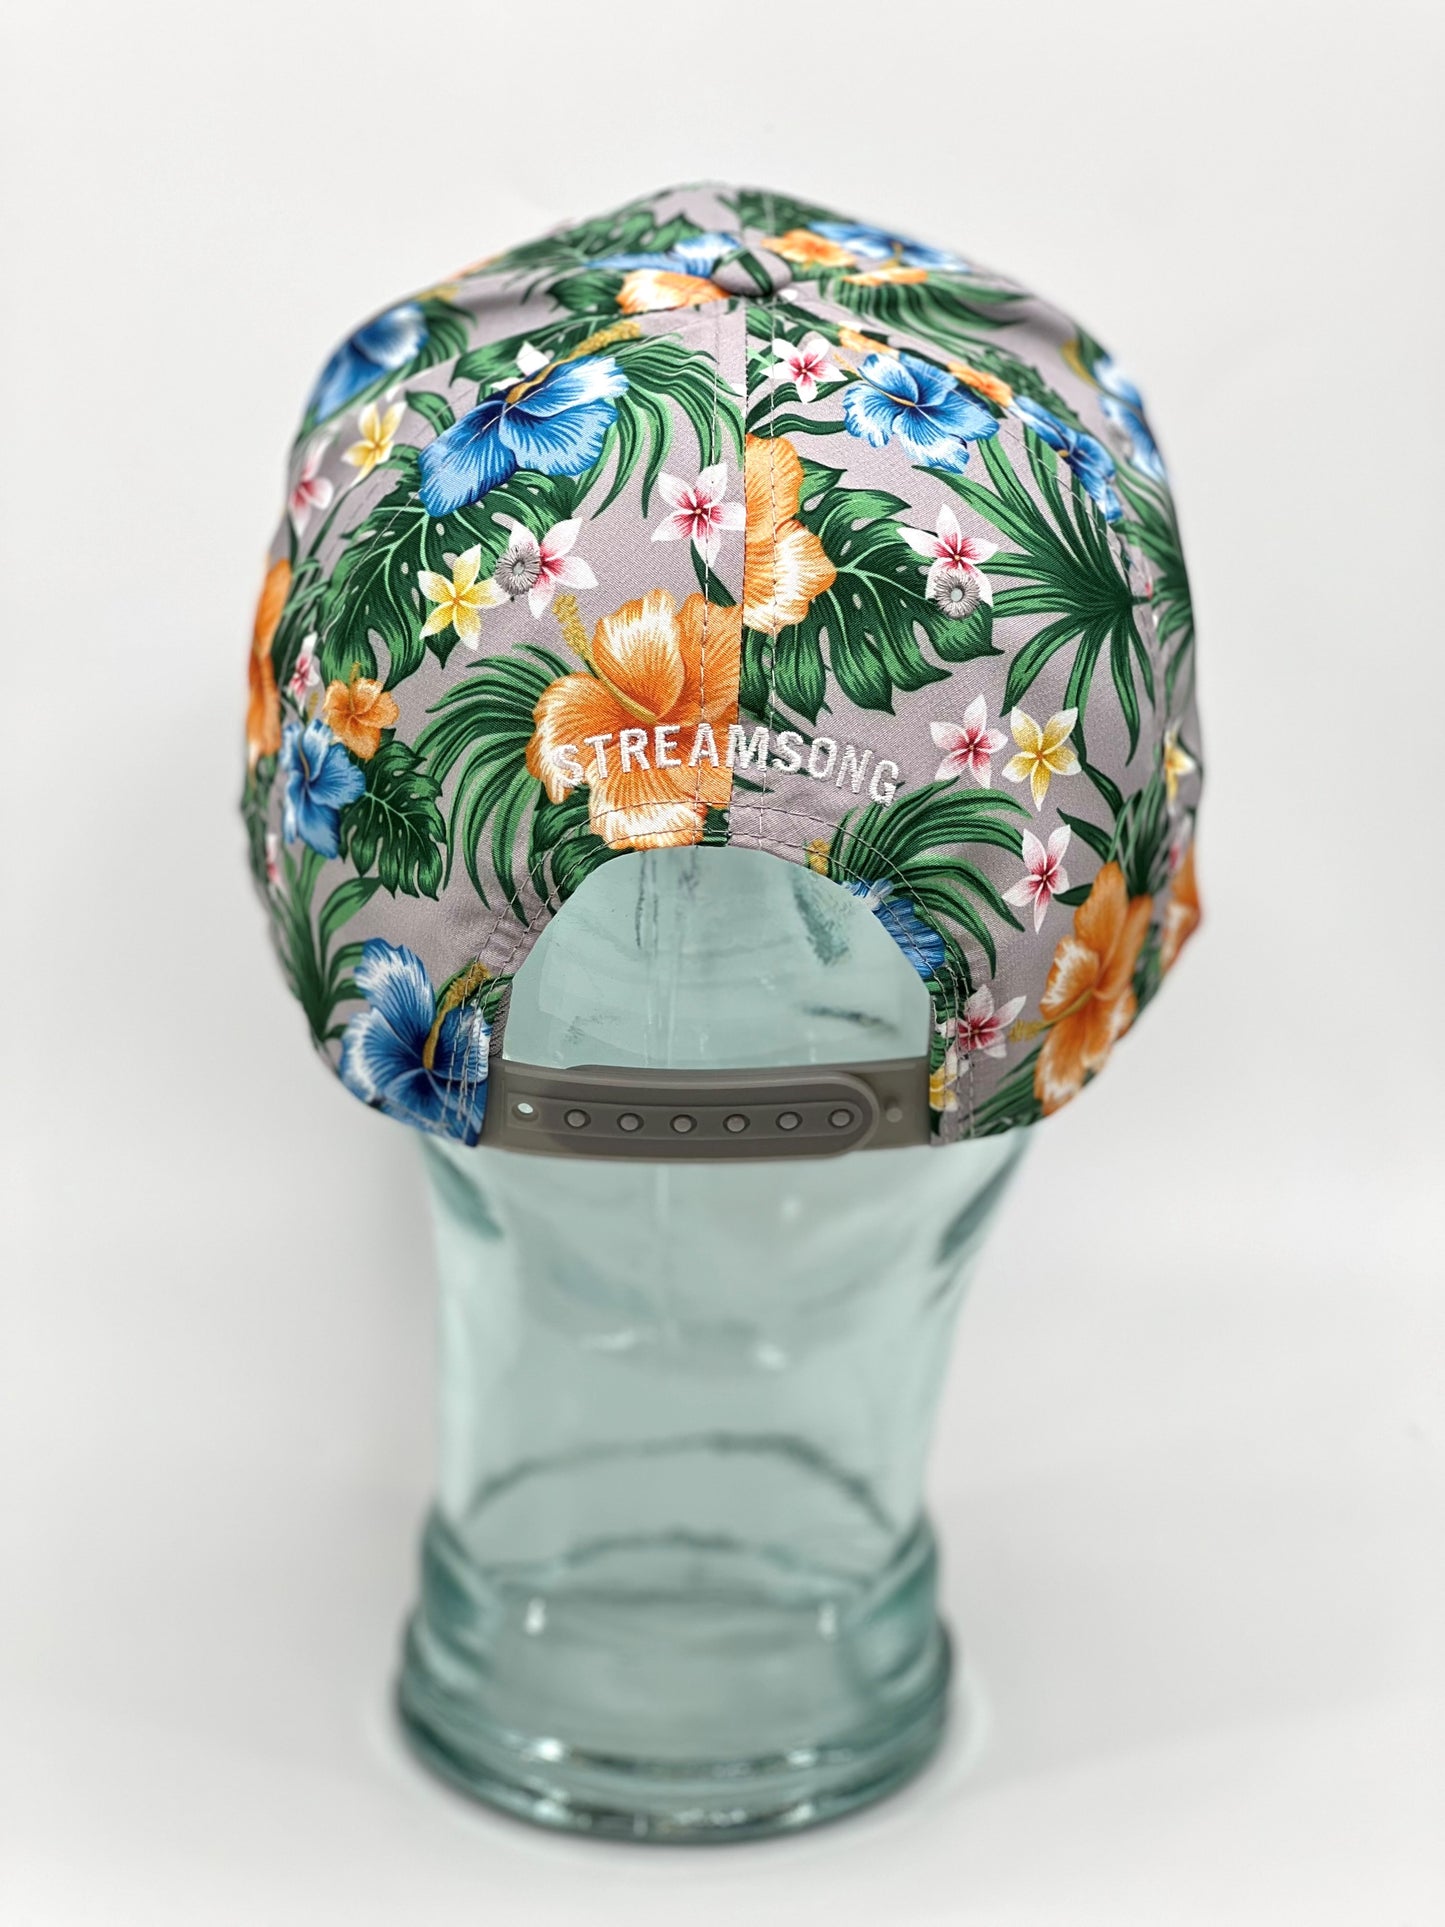 Pukka Megalodon Floral Sublimated High Crown 6 Panel Hat